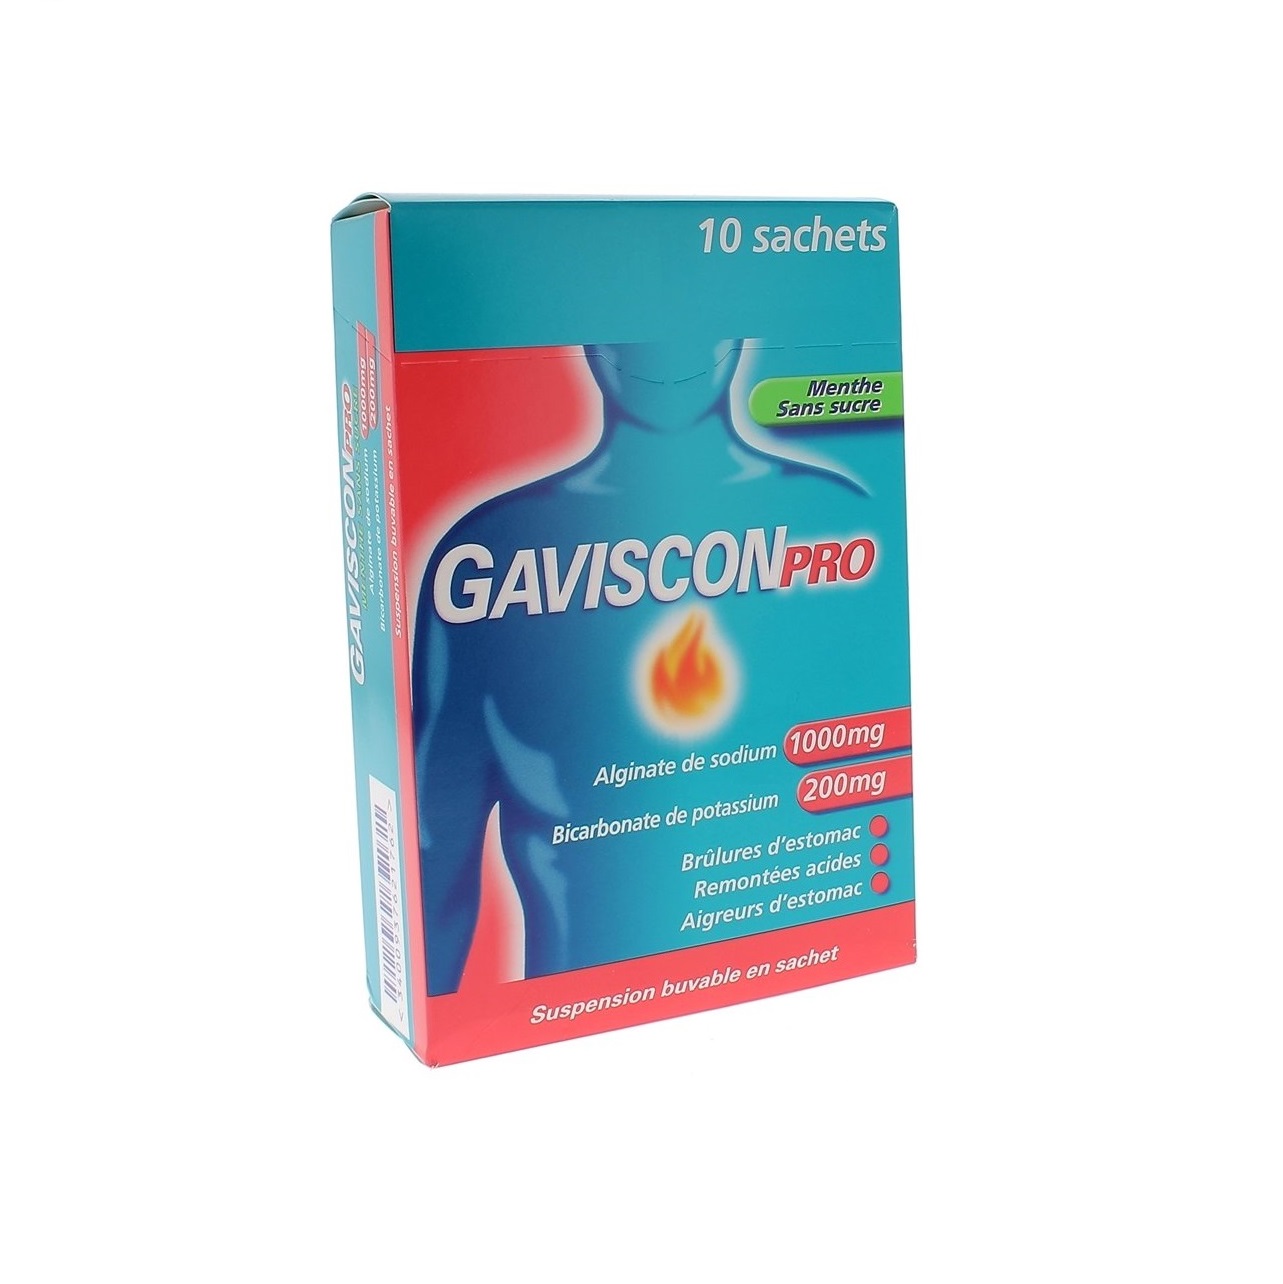 Buy GavisconPro sugar free 10 sachets online in the US pharmacy.